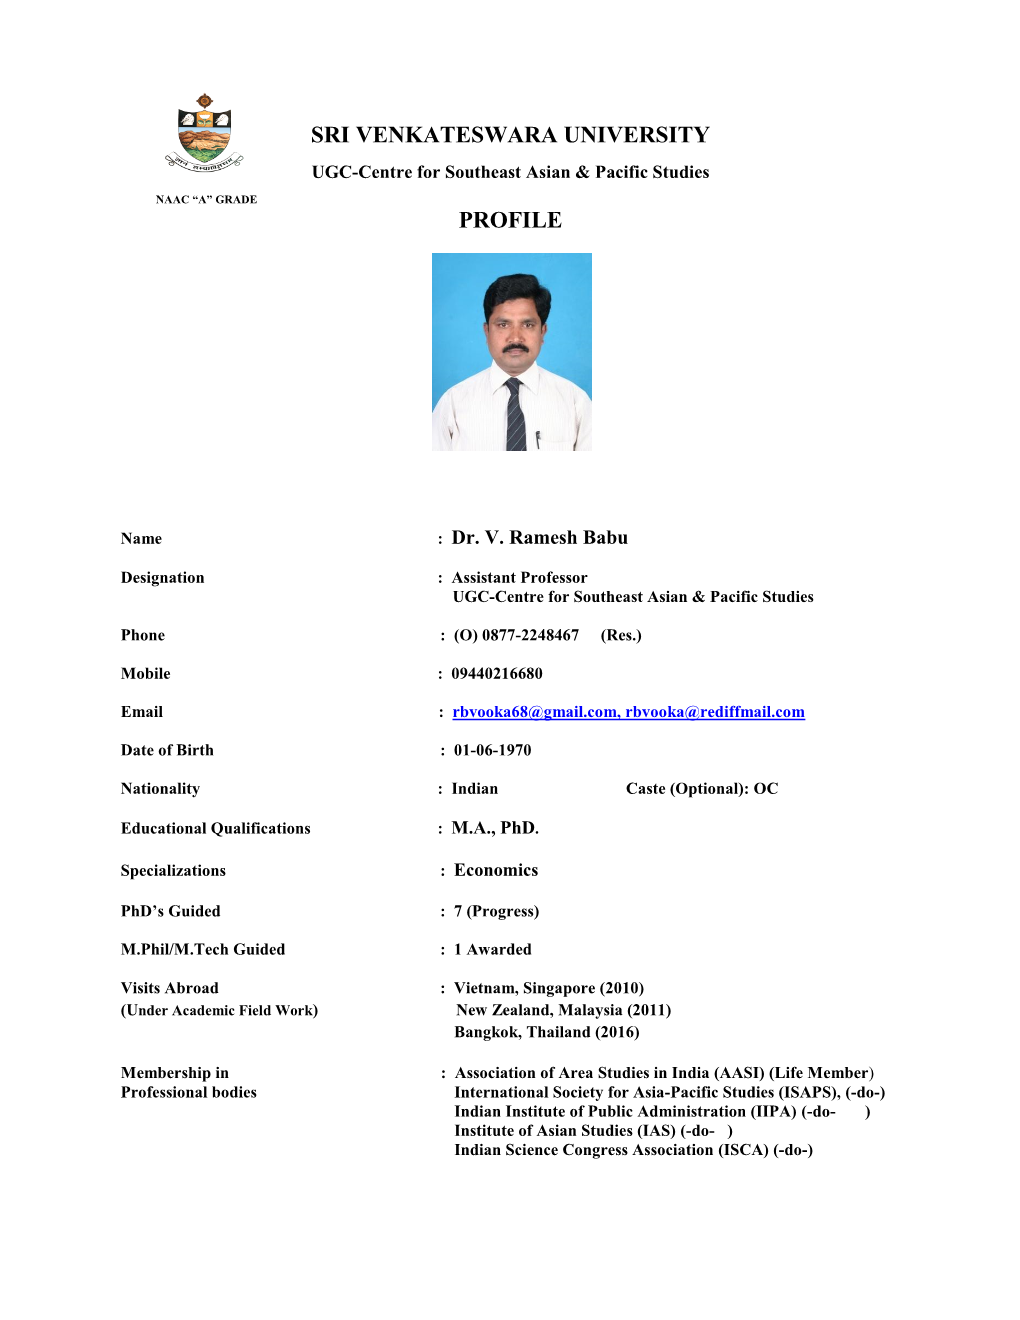 Sri Venkateswara University Profile